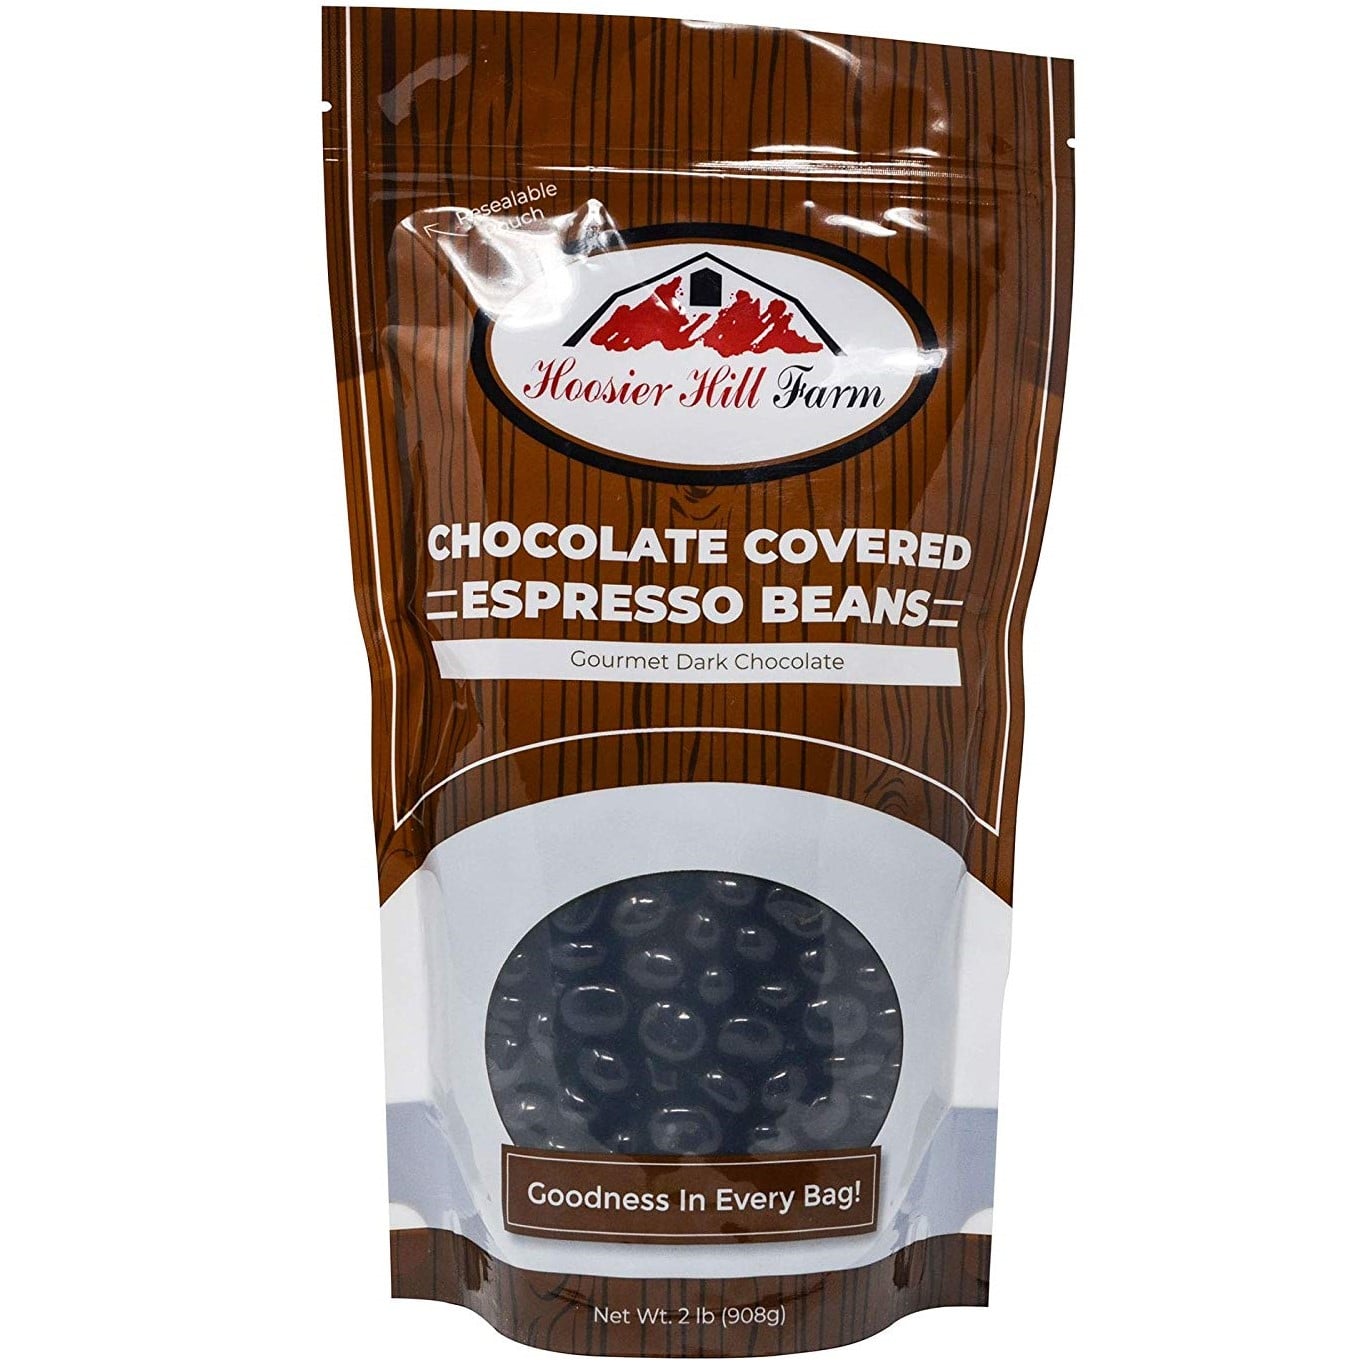 Hoosier Hill Farm Chocolate Covered Espresso Beans